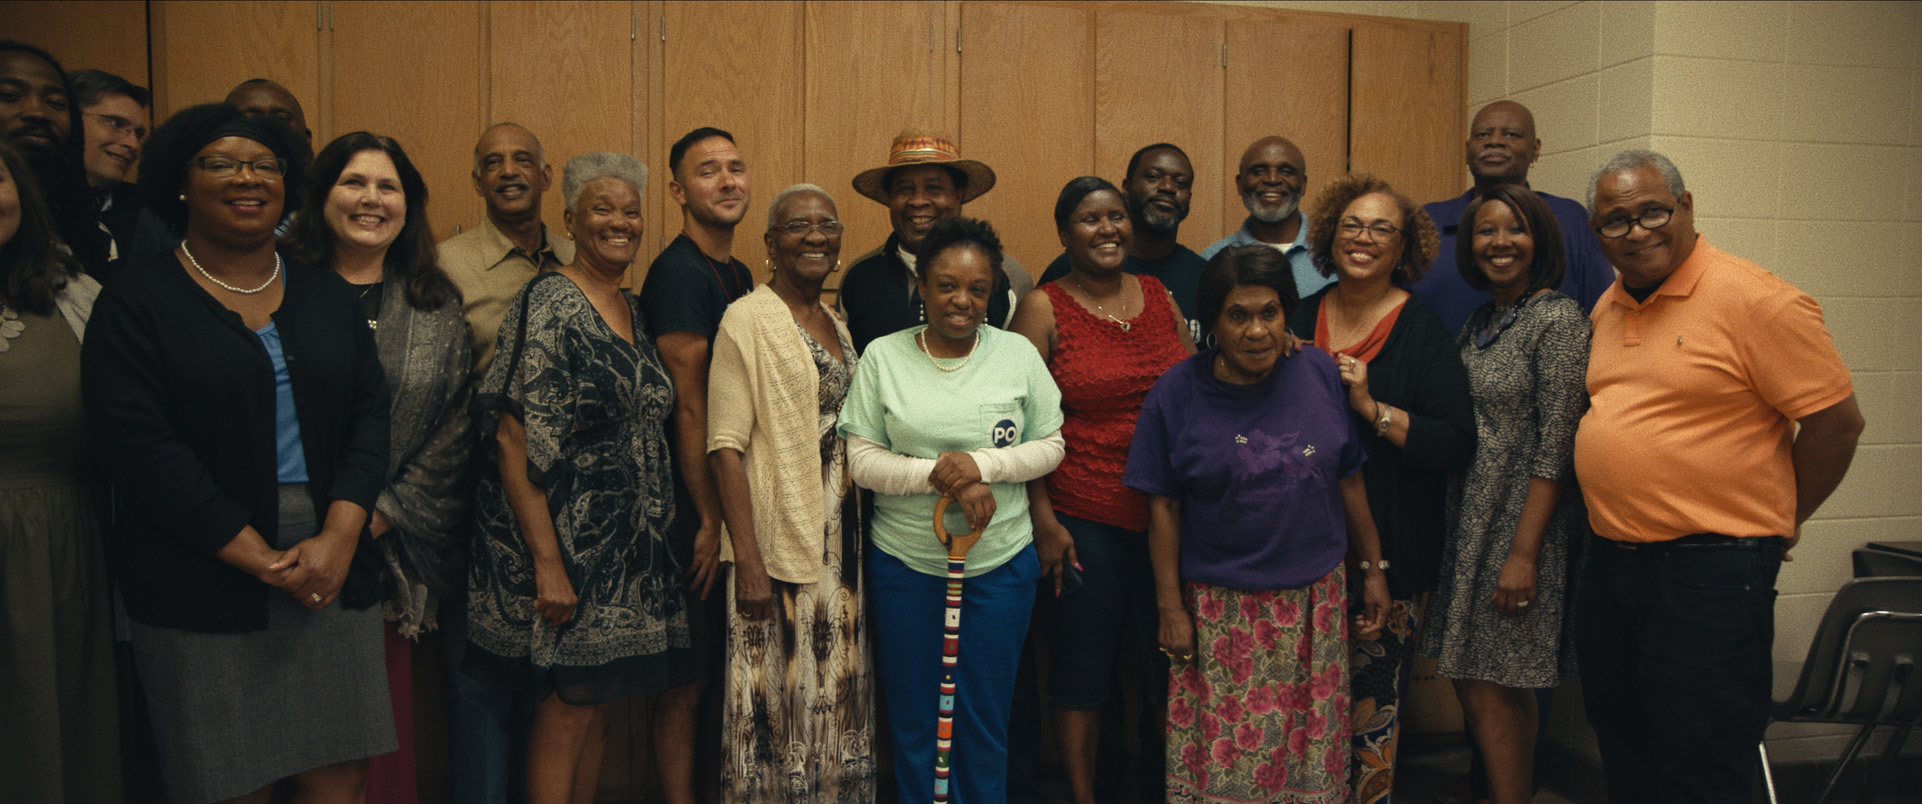 Clotilda descendants and community activists stand in a room in Descendant